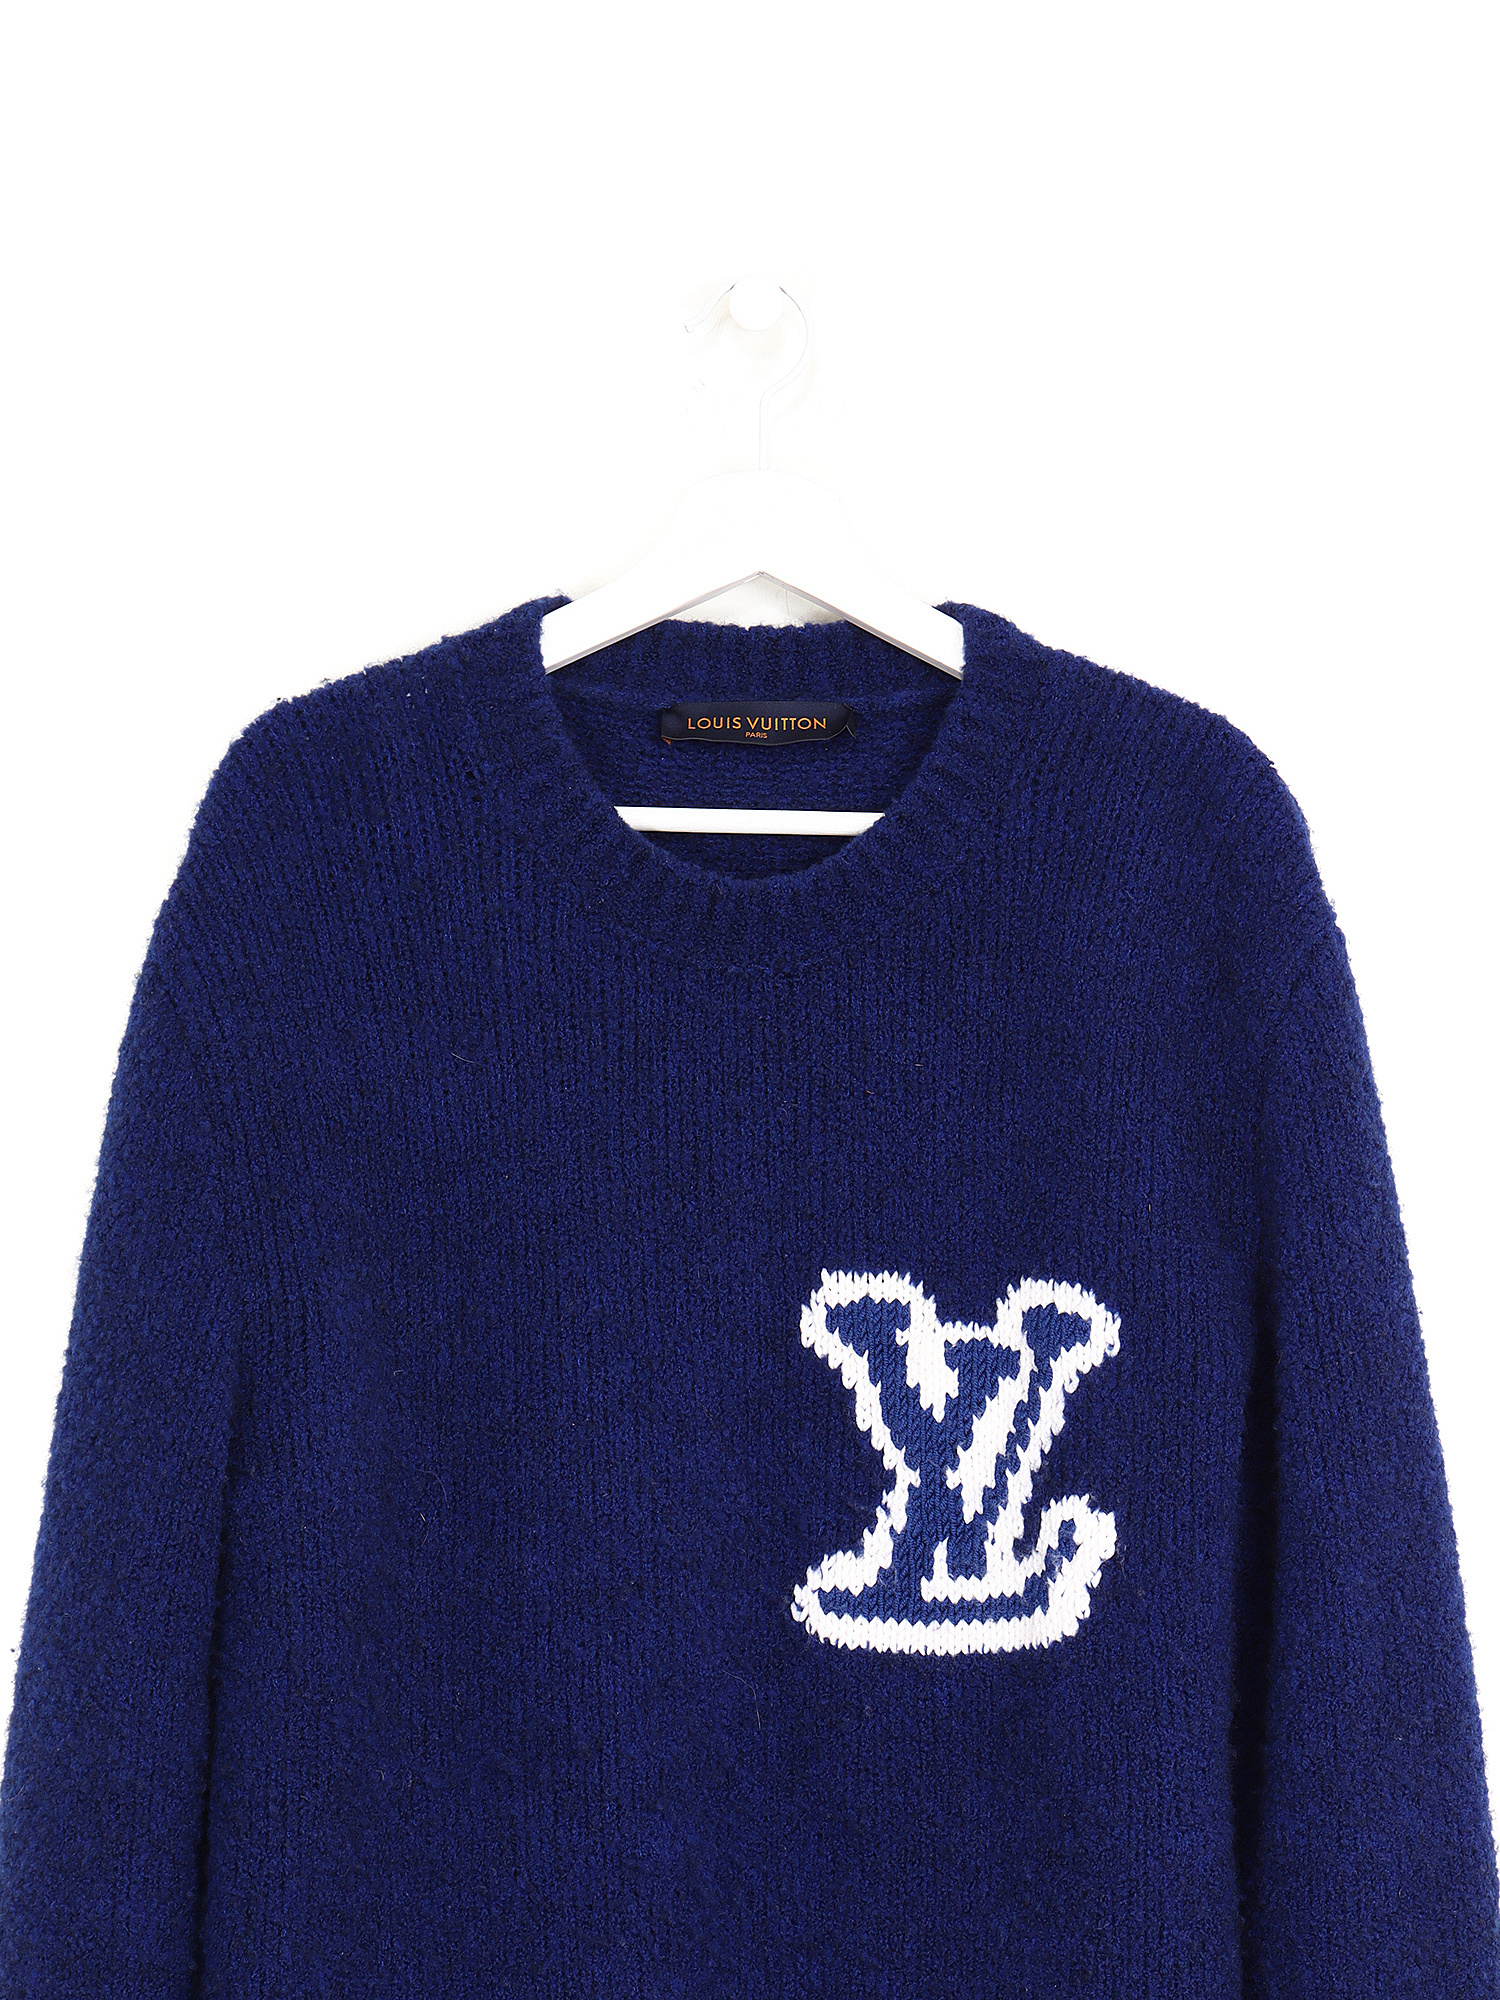 Louis Vuitton Hoodie Blue Discount SAVE 42  icarusphotos